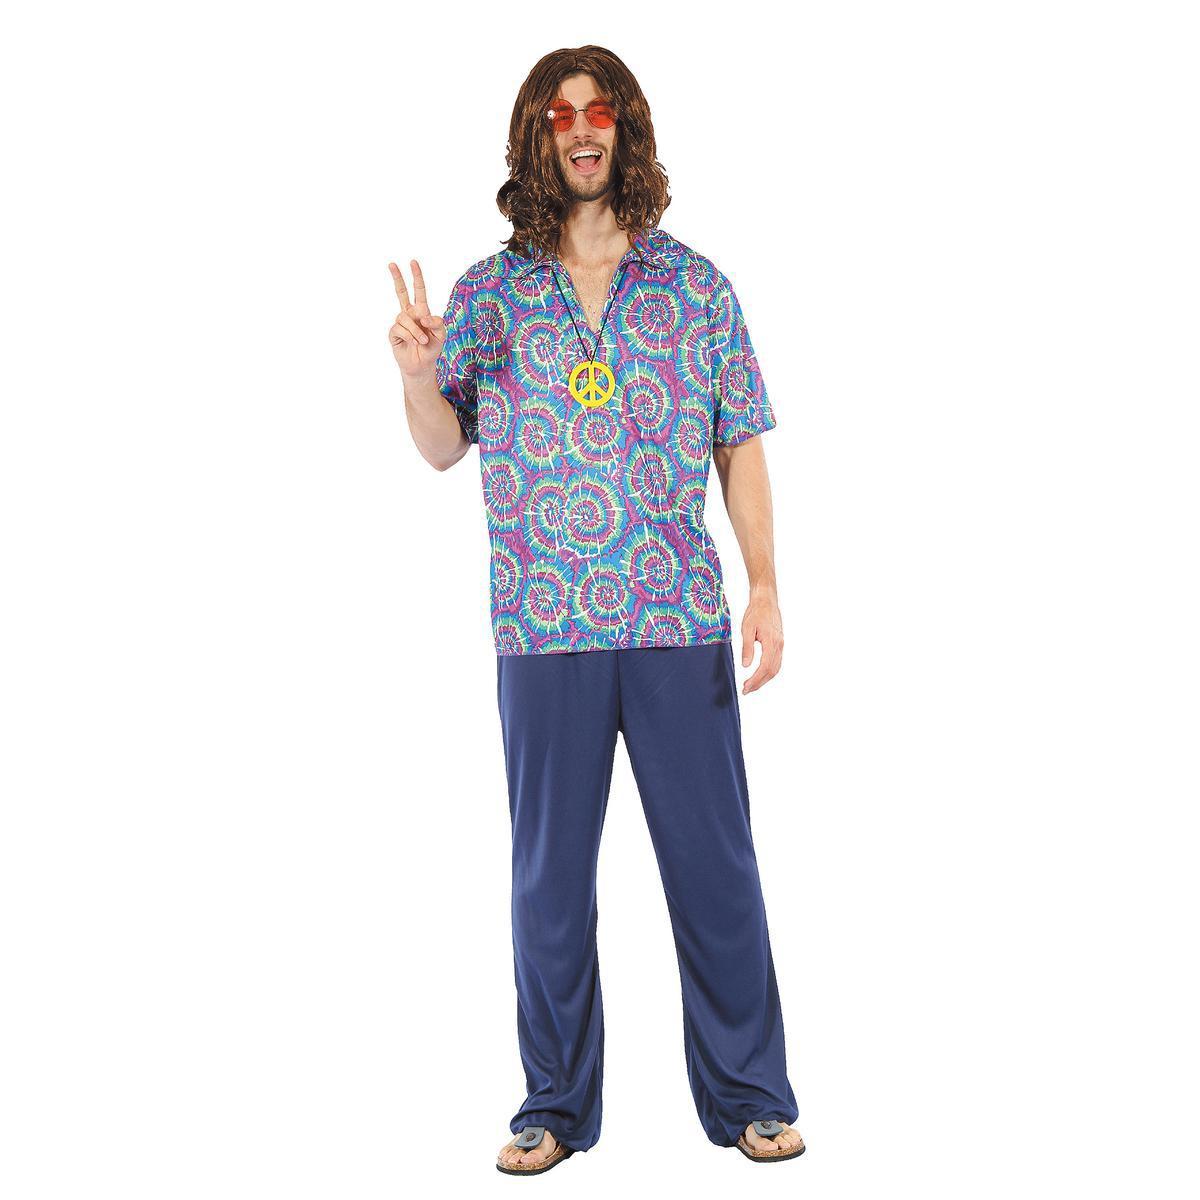 Déguisement homme hippie - polyester - Taille adulte - Multicolore